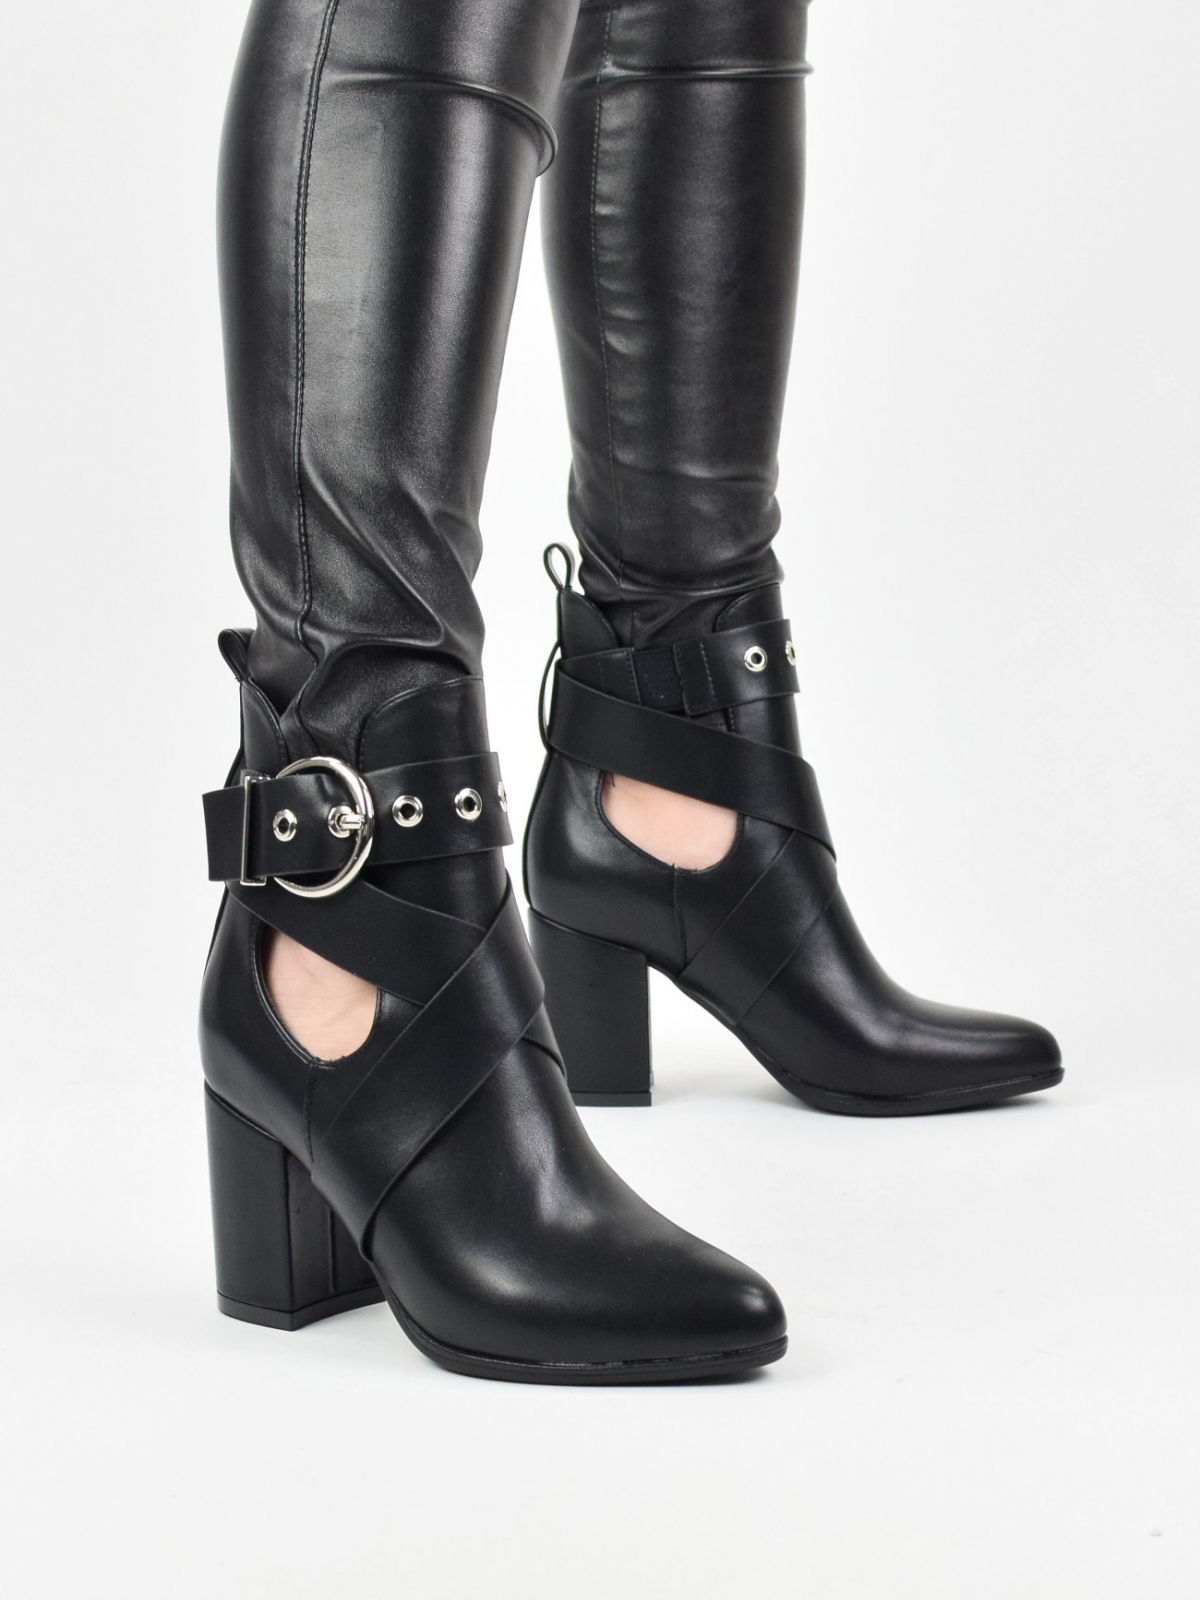 Exclusive design ankle boots in semi matte black